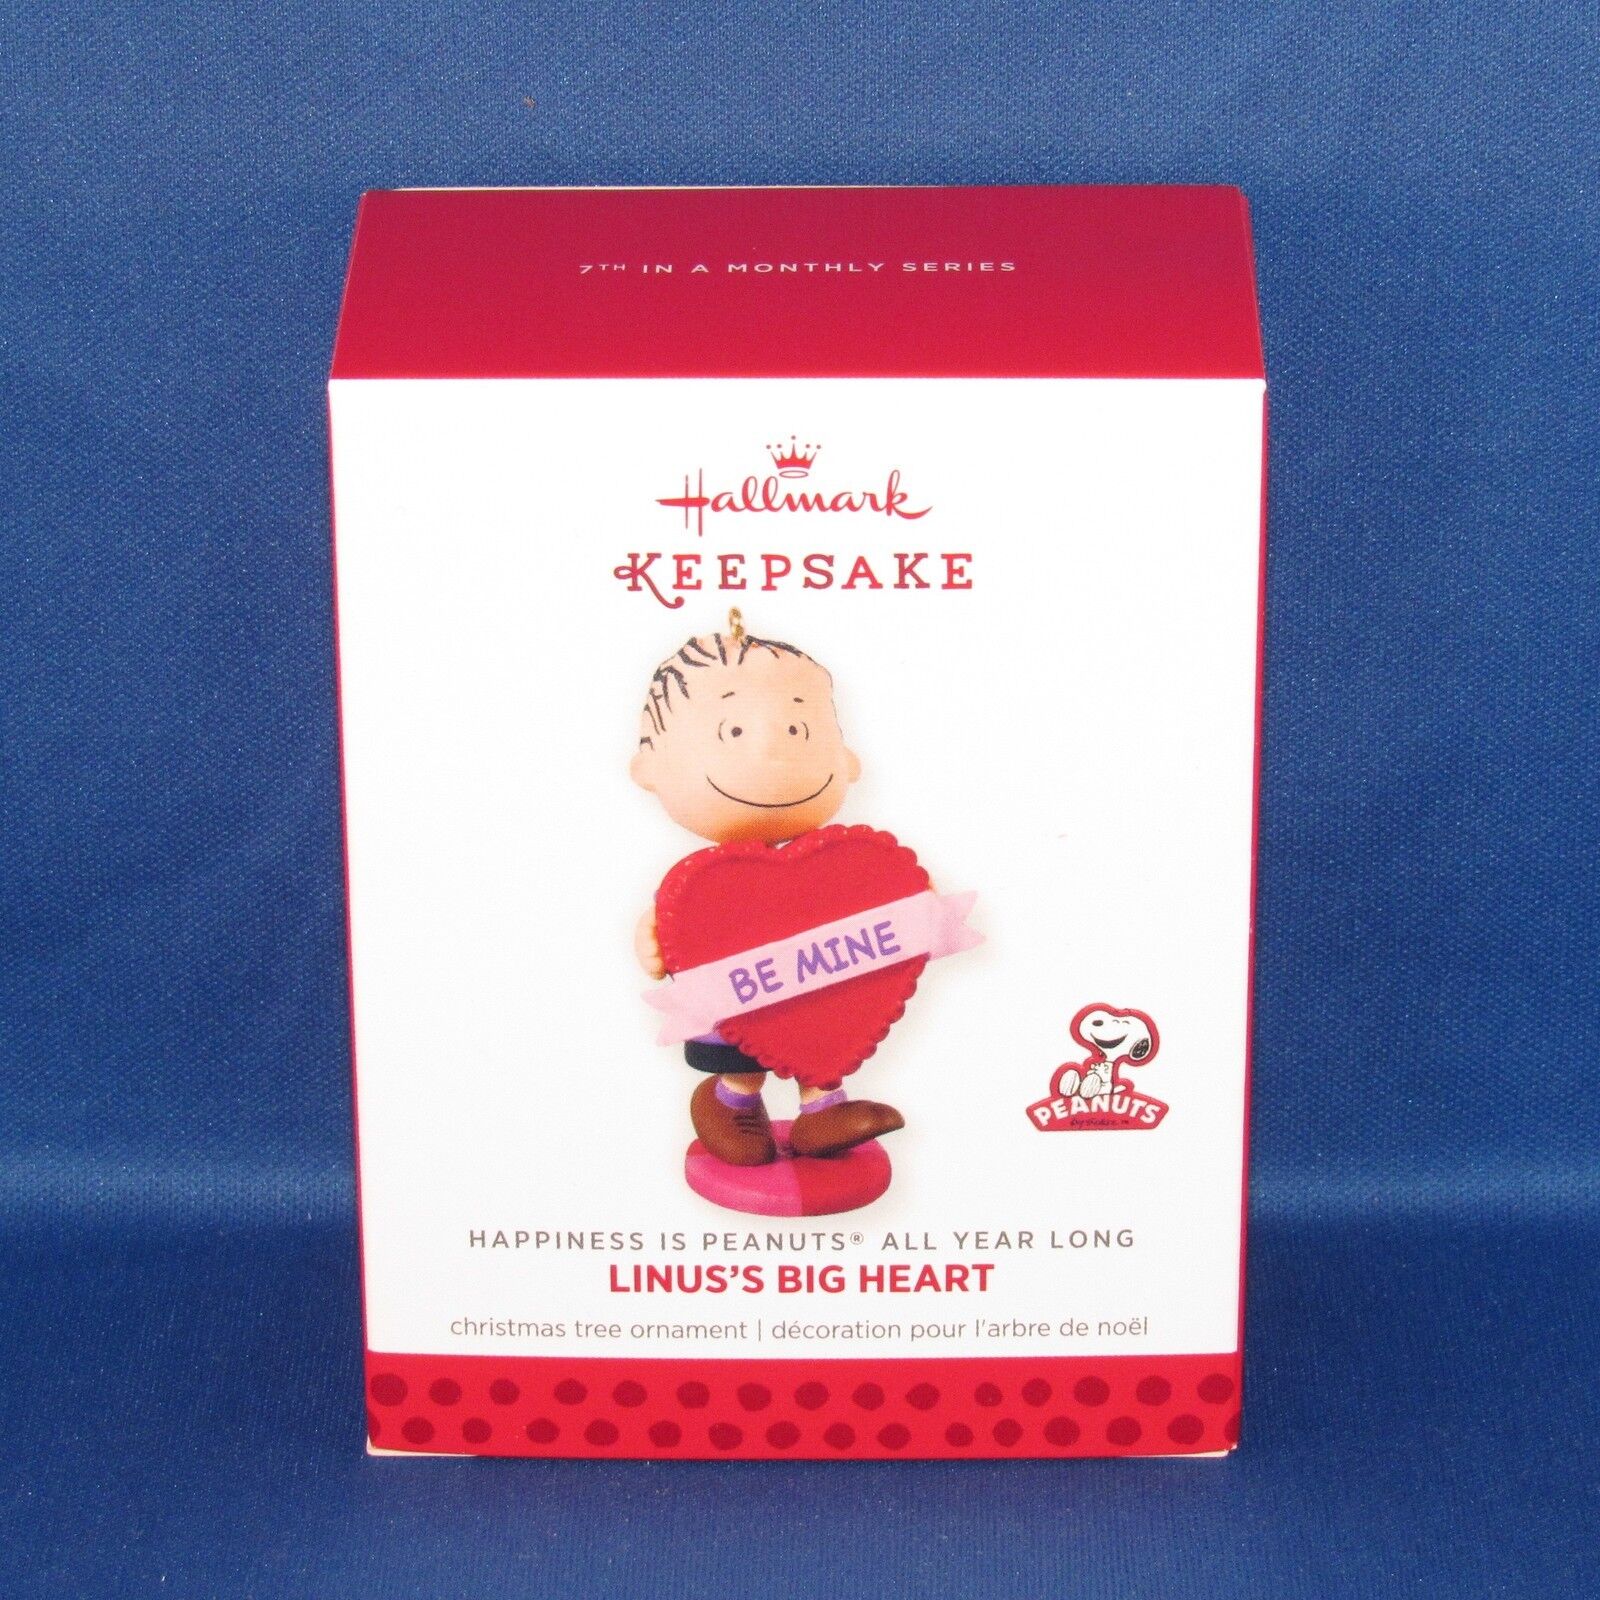 Hallmark - Linus\'s Big Heart Peanuts All Year Long #7 Keepsake Ornament - NEW